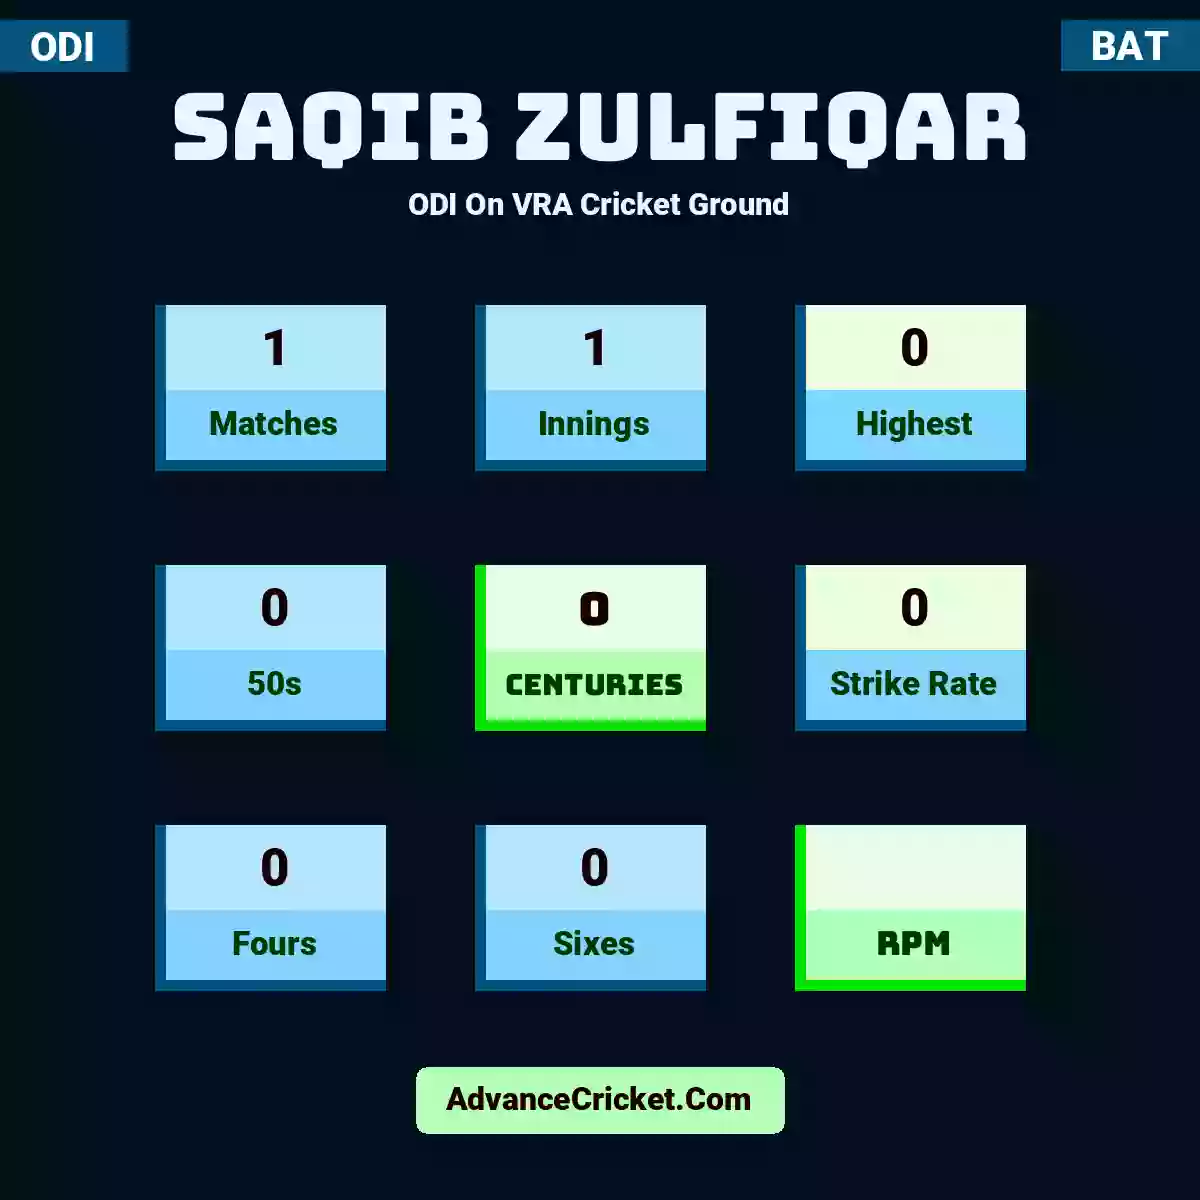 Saqib Zulfiqar ODI  On VRA Cricket Ground, Saqib Zulfiqar played 1 matches, scored 0 runs as highest, 0 half-centuries, and 0 centuries, with a strike rate of 0. S.Zulfiqar hit 0 fours and 0 sixes.